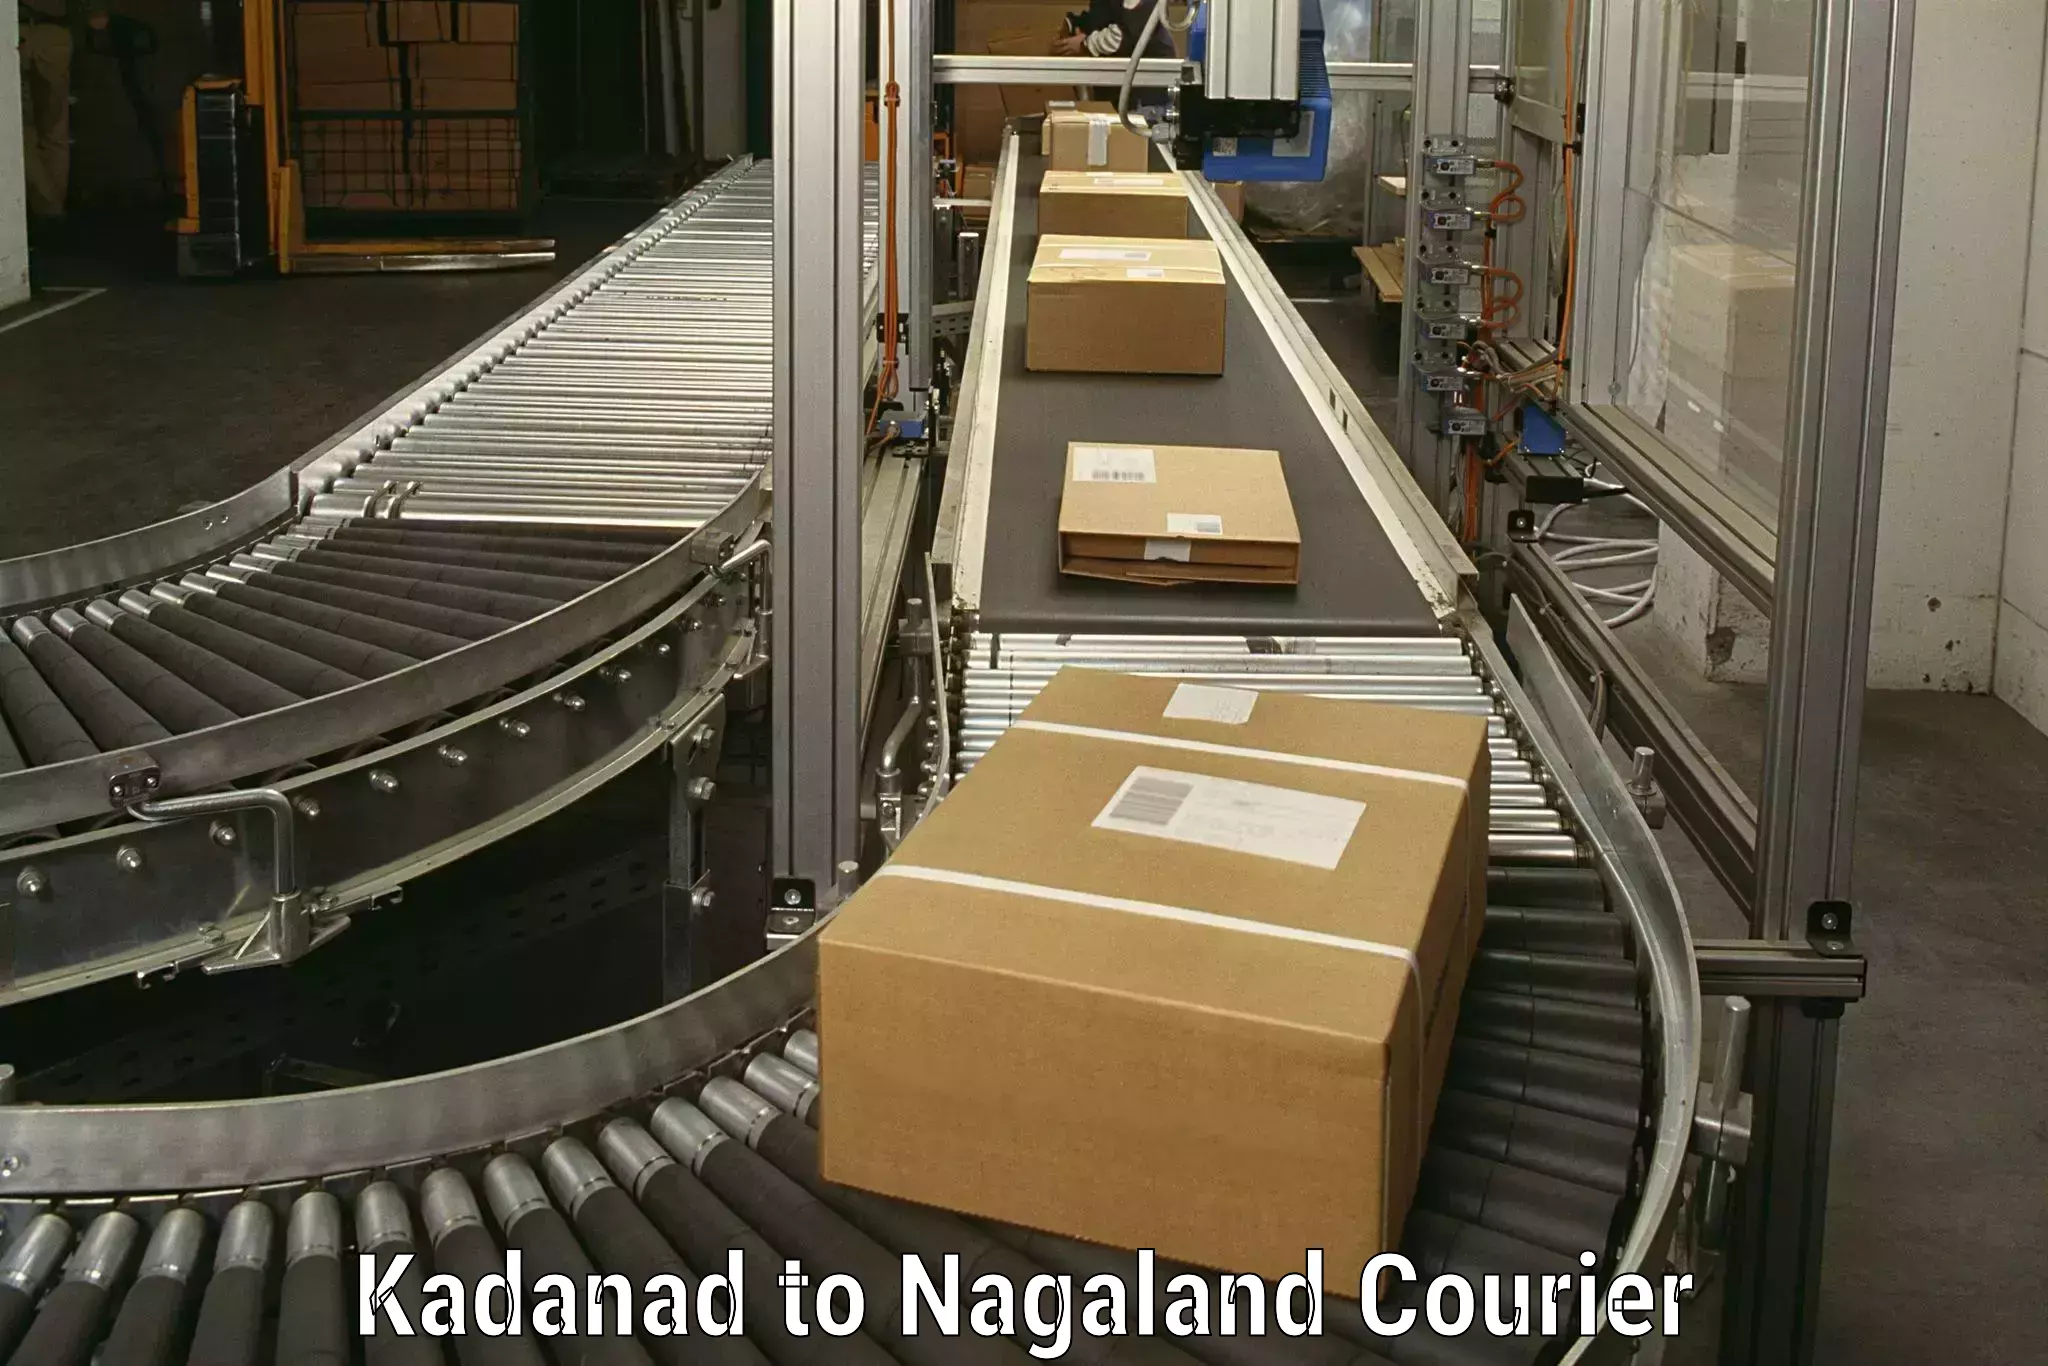 Furniture delivery service Kadanad to Mokokchung